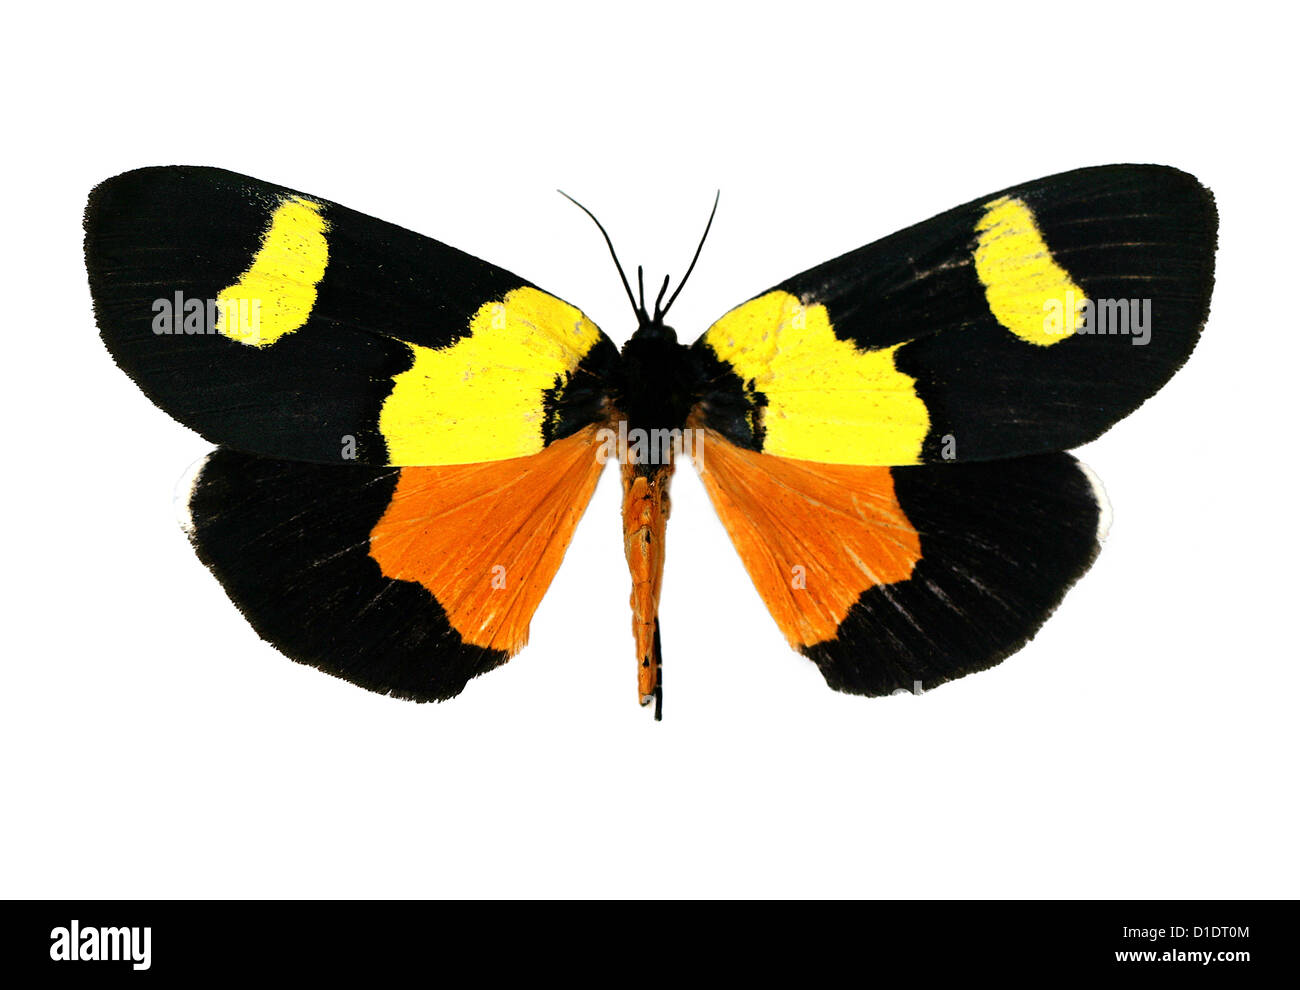 A Nolid Moth, Eligma laetipicta, Nolidae, Lepidoptera. Kenya, Malawi, East Africa. Mounted Specimen. Photo/Cutout. Stock Photo